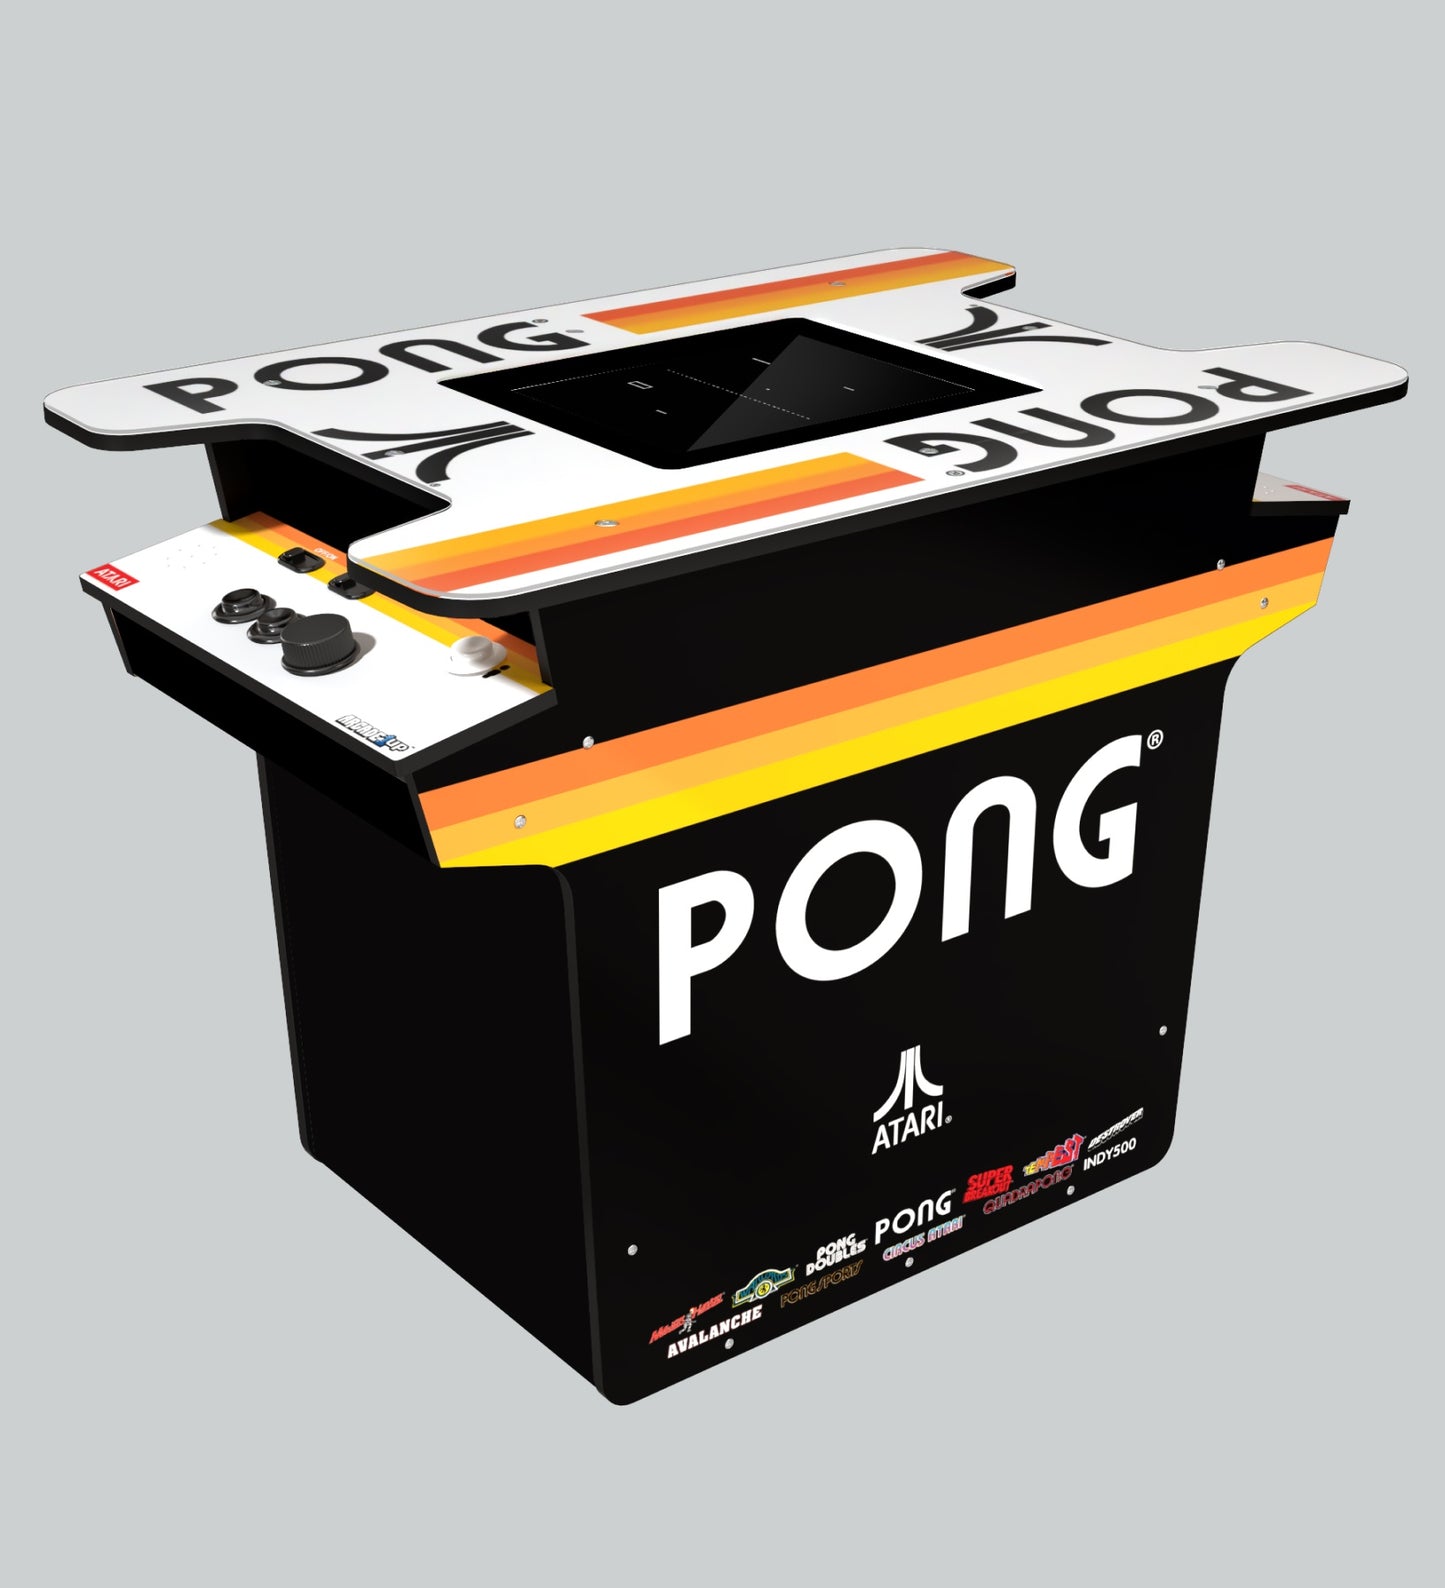 Arcade1Up Pong® Head-to-Head Arcade Table